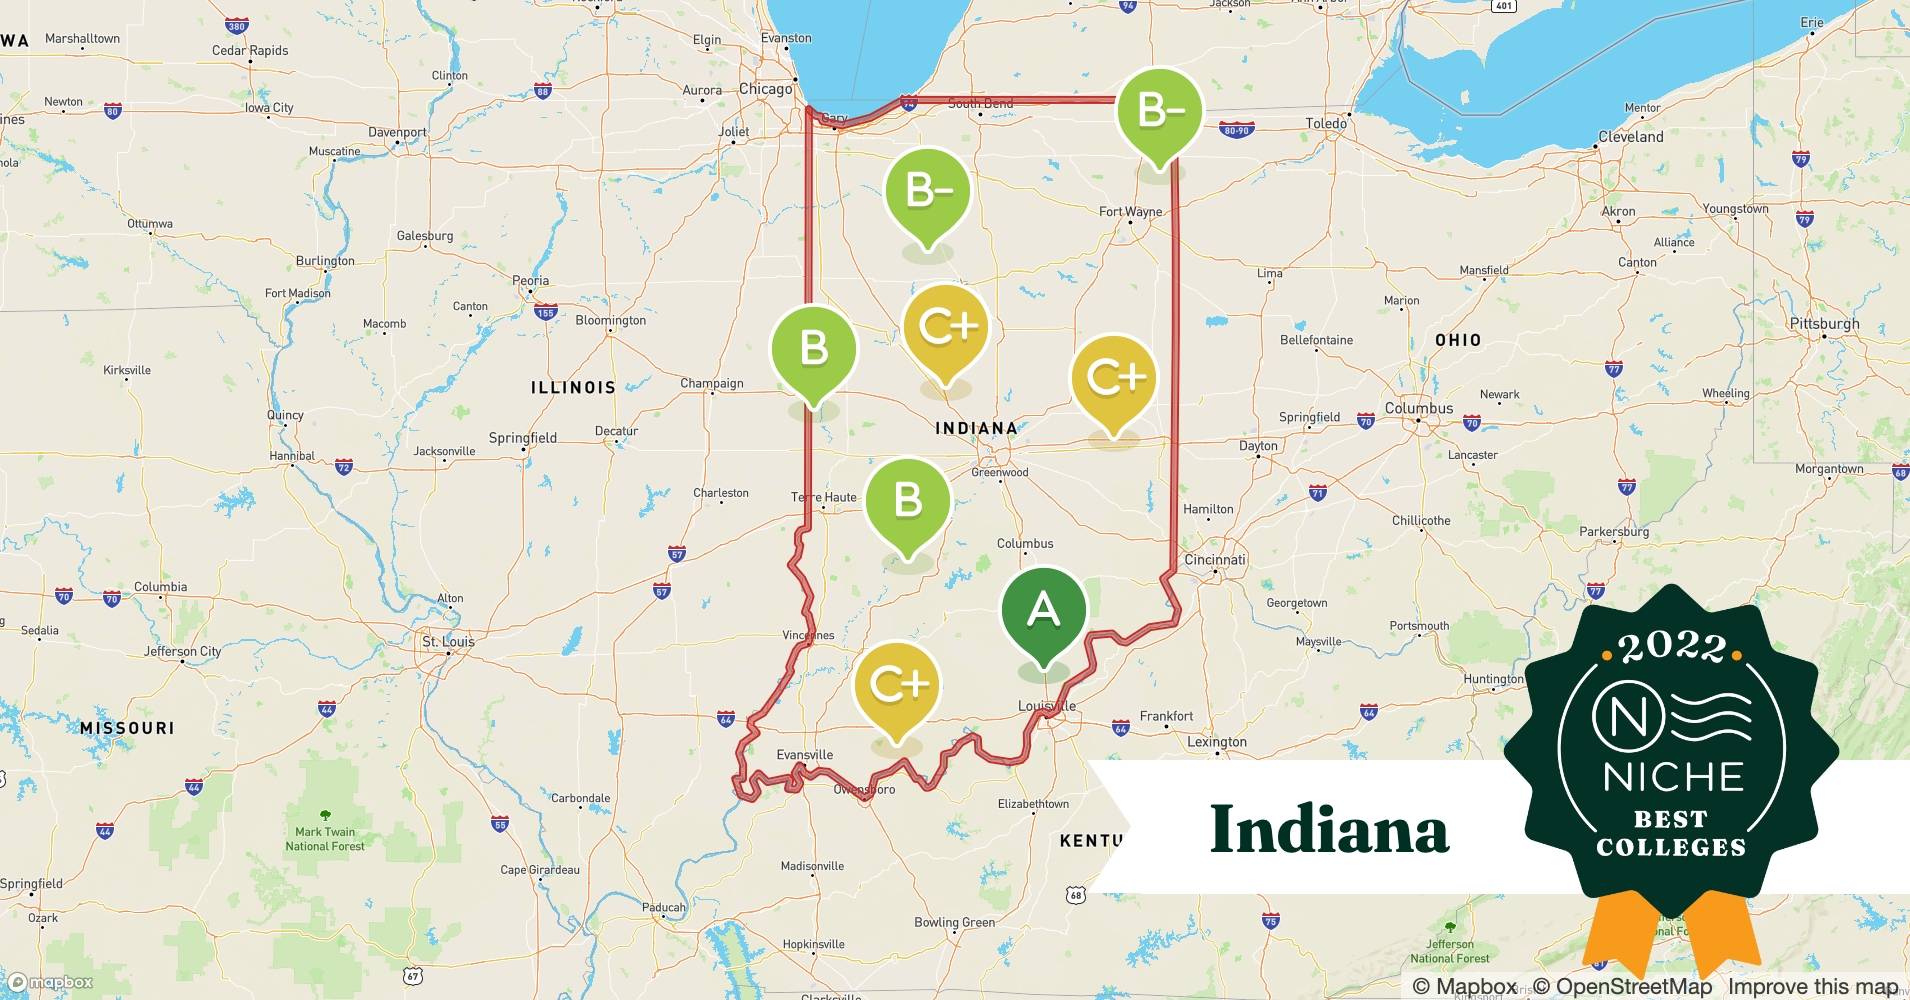 Best Universities Announces 2022 Best Colleges in Indiana 1